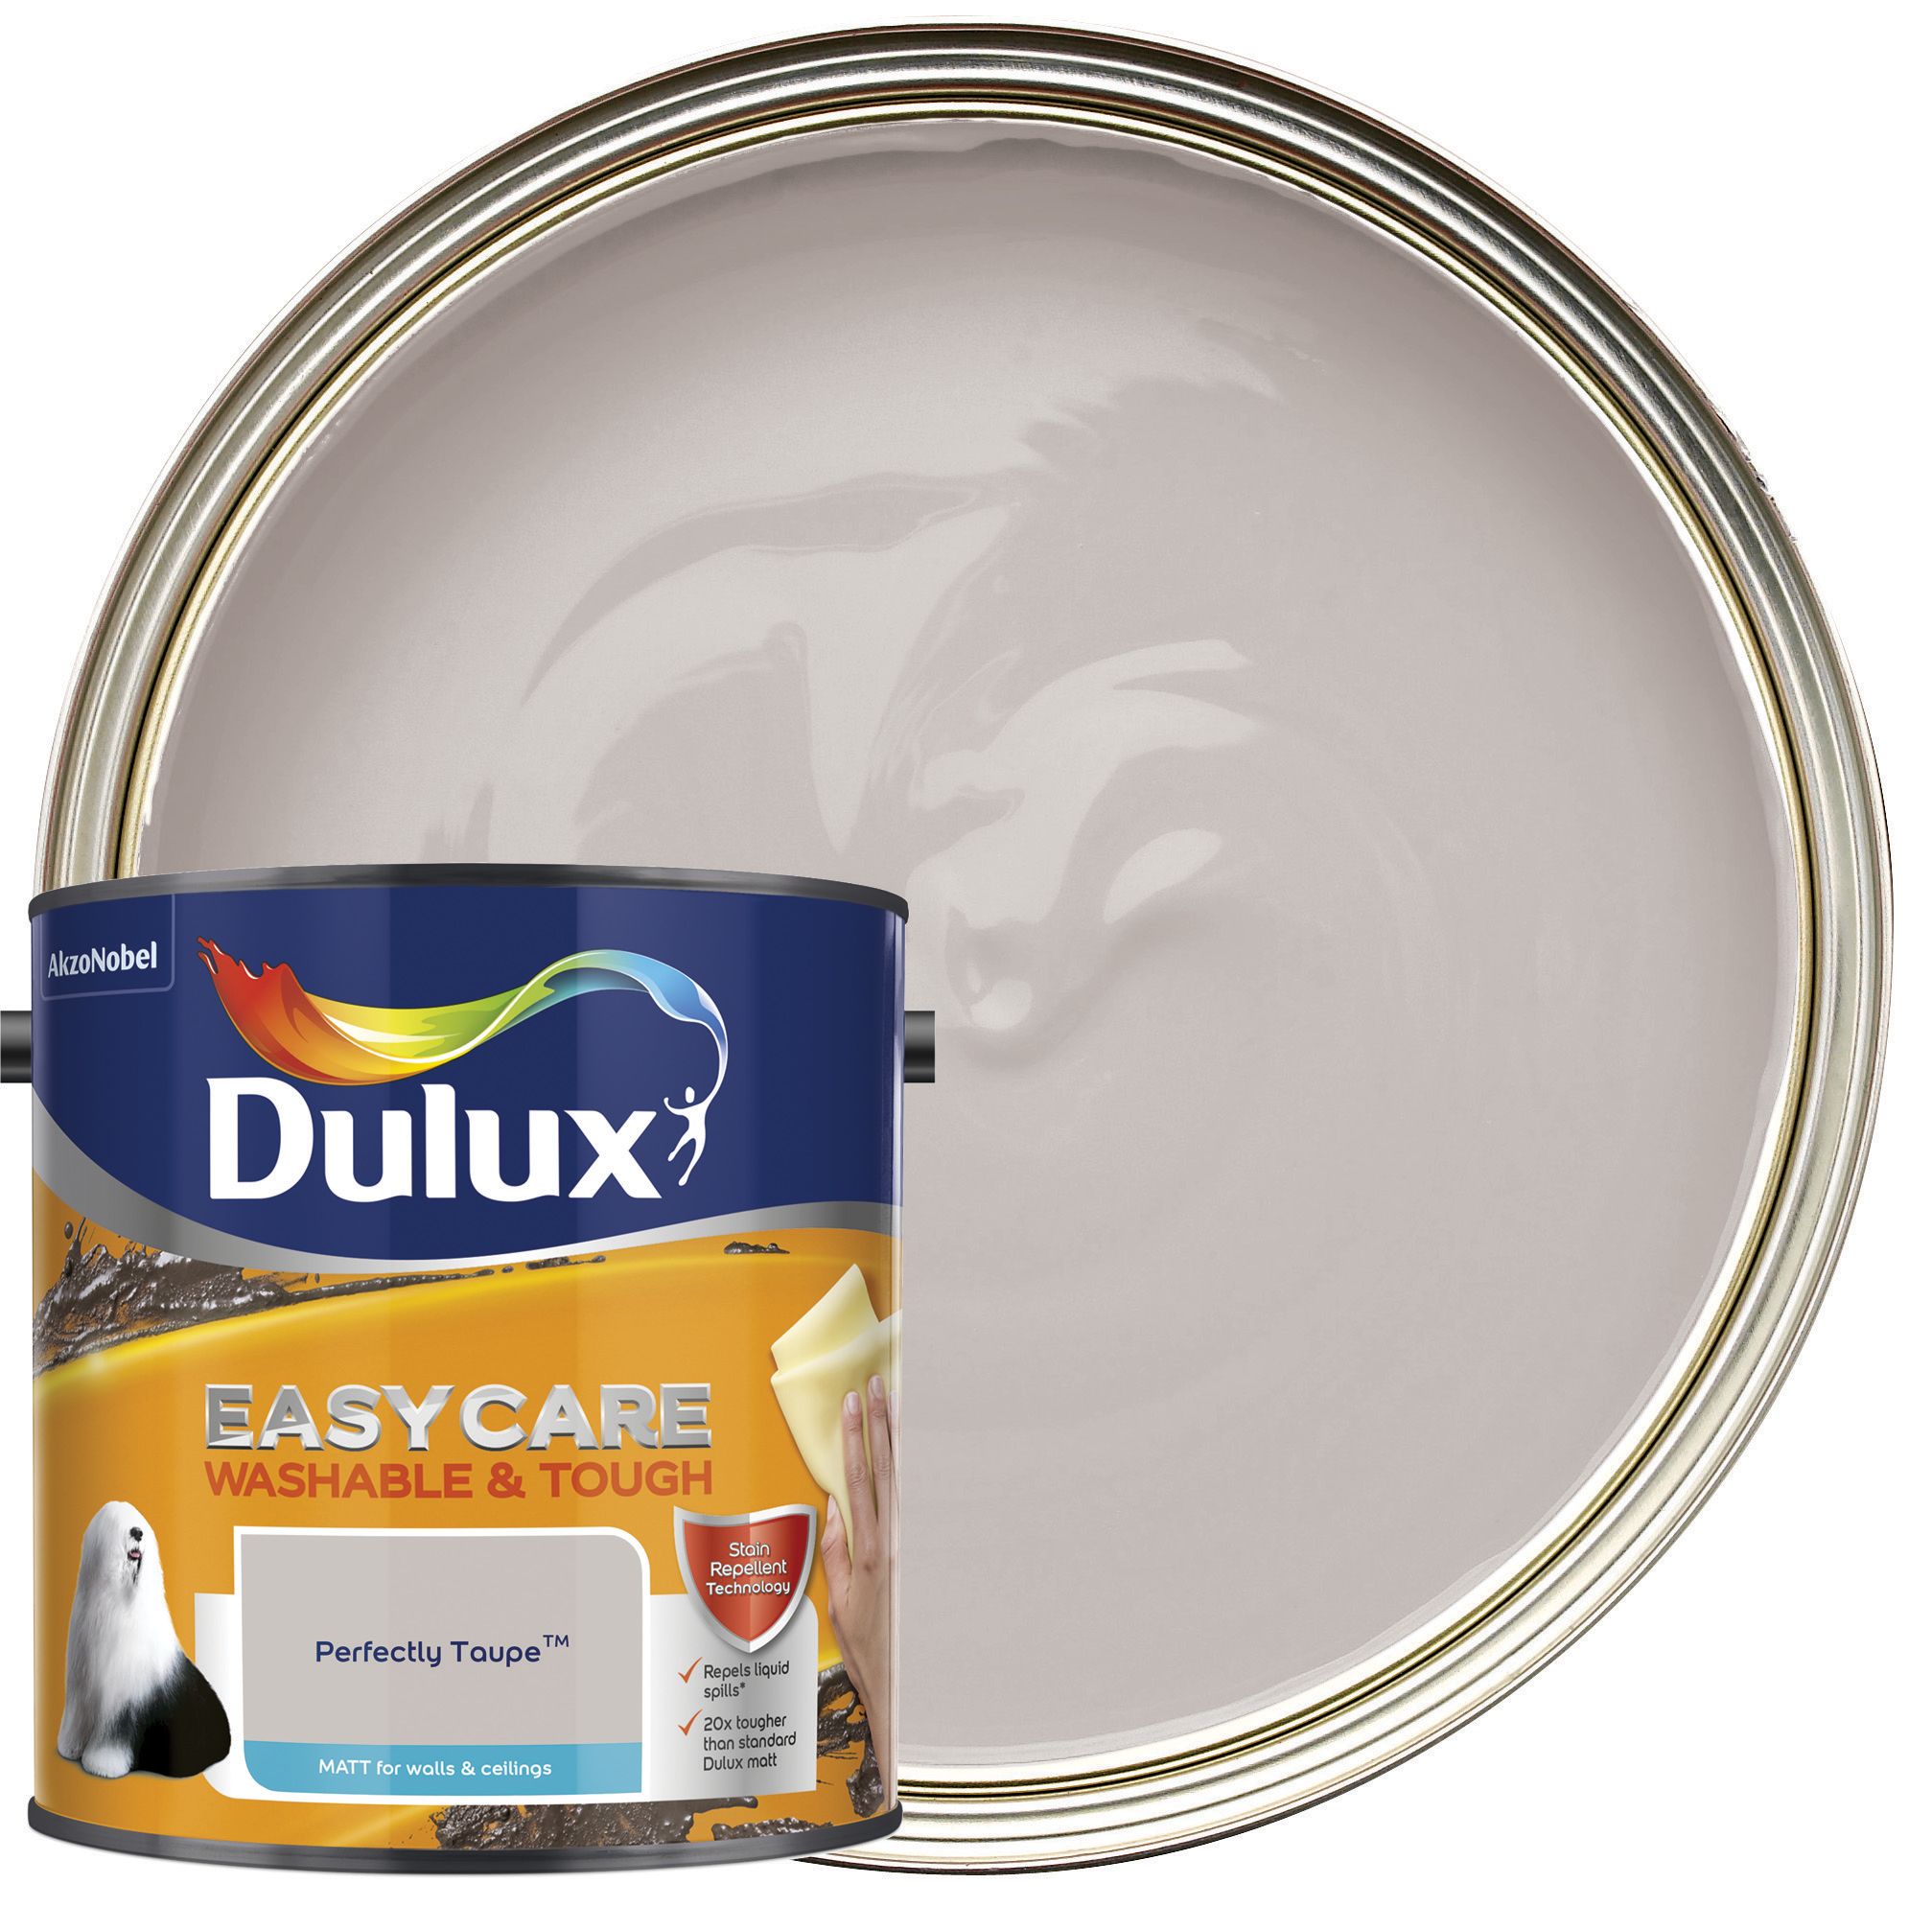 Image of Dulux Easycare Washable & Tough Matt Emulsion Paint - Perfectly Taupe - 2.5L